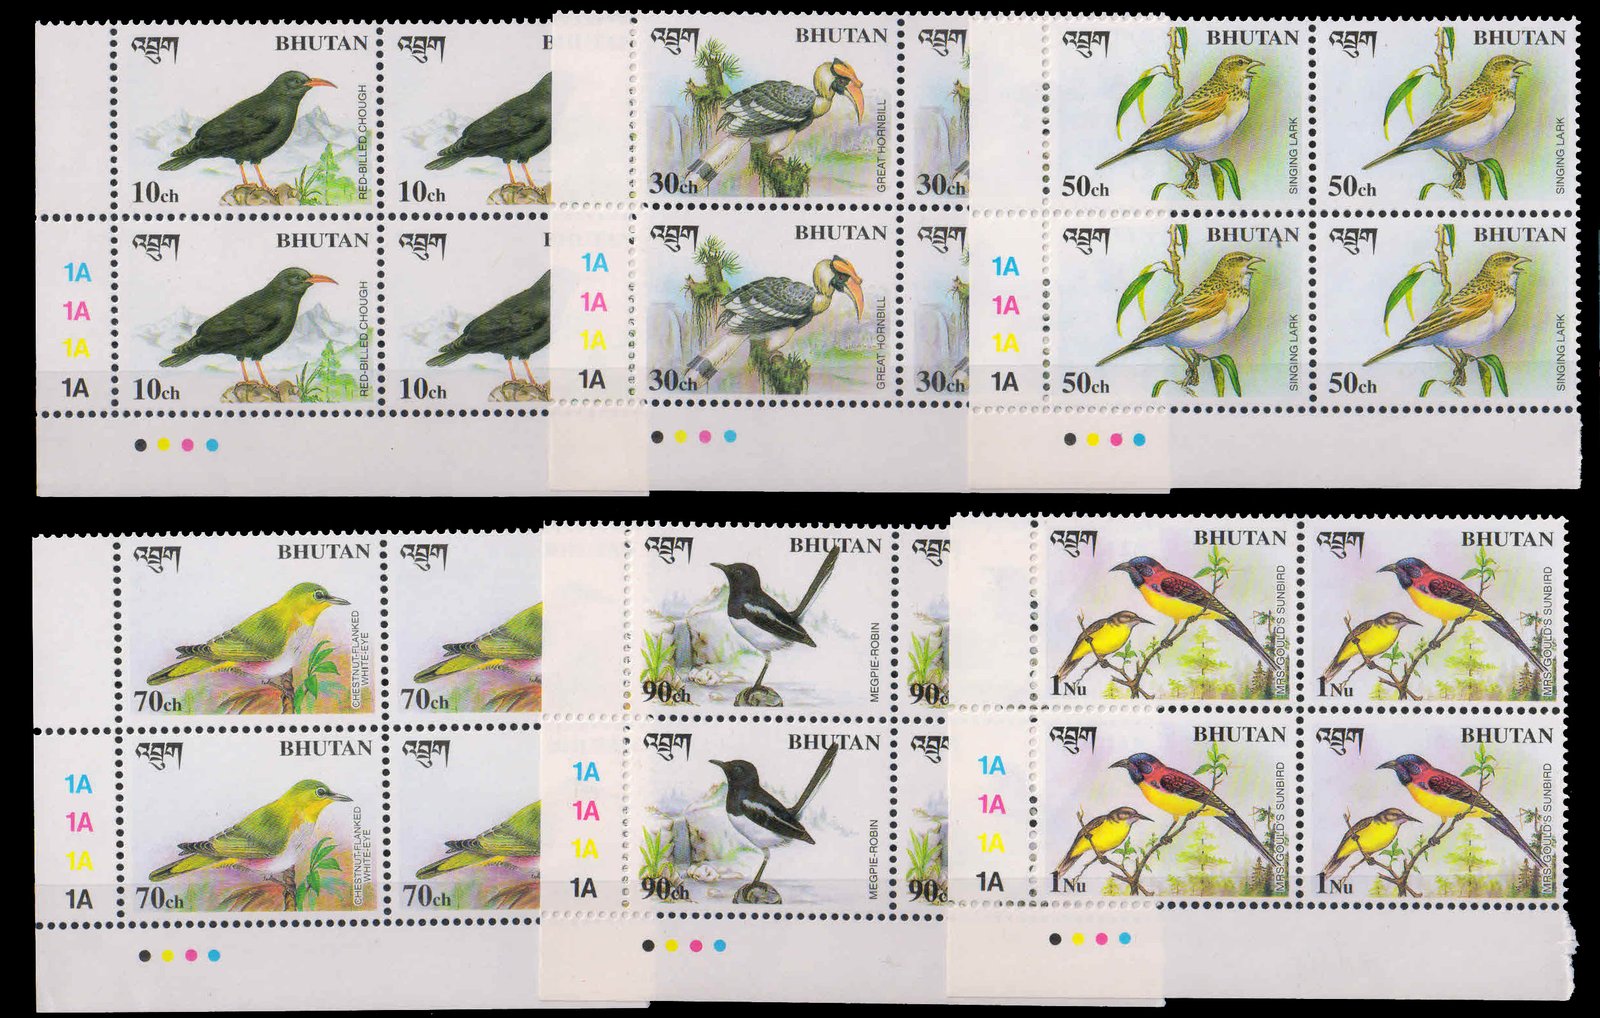 BHUTAN 1998-Birds, 6 Different Blocks with Traffic Light, 3rd Position, MNH, S.G. 1272-1277, Cat � 5-